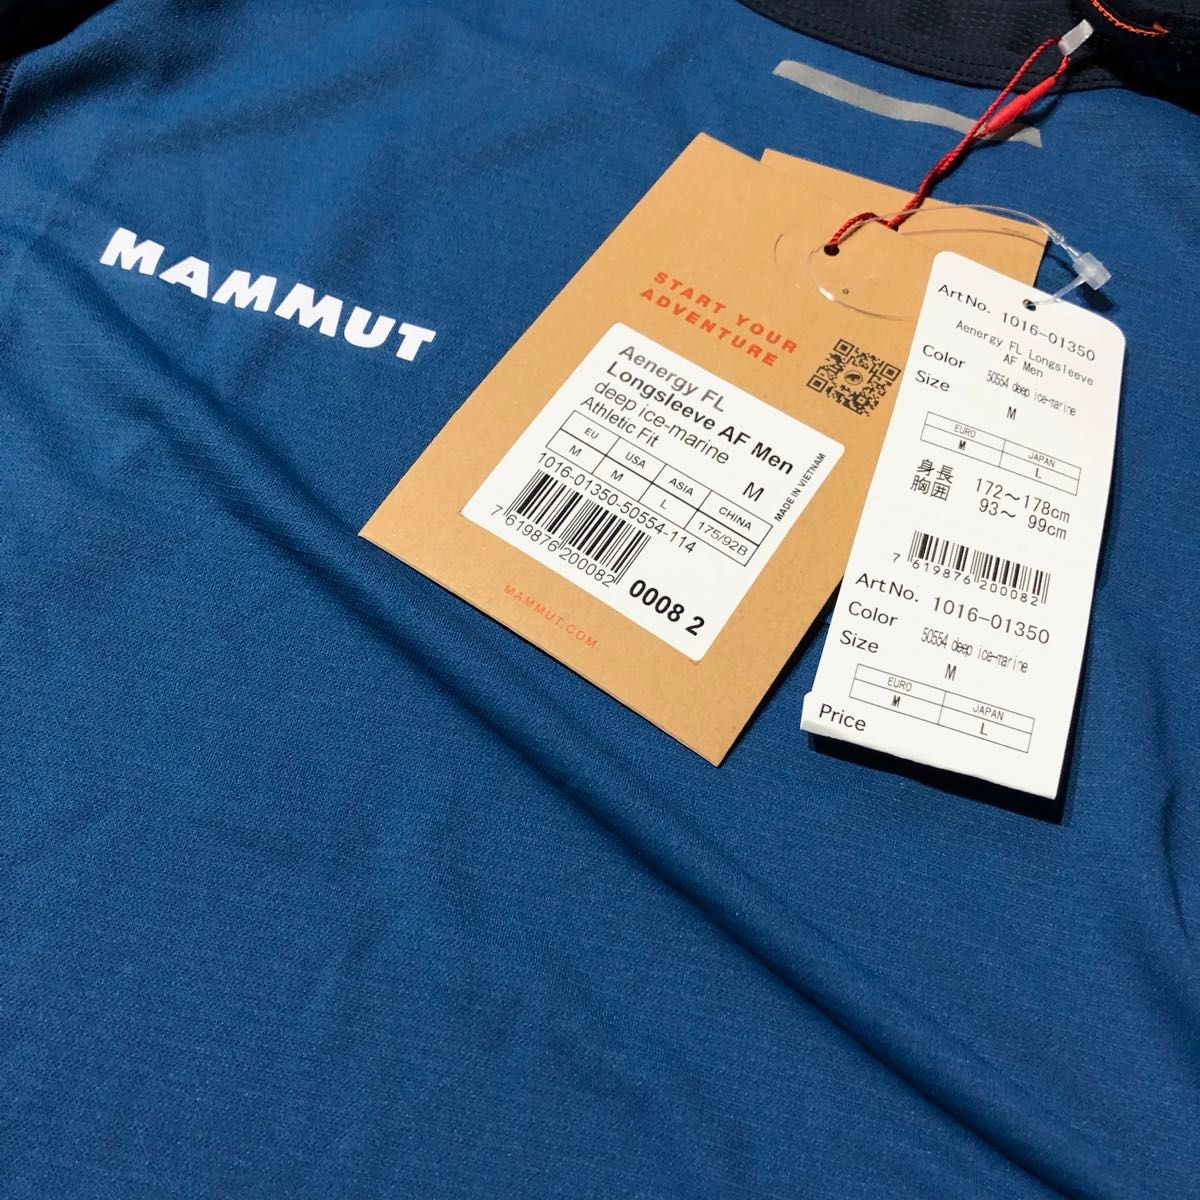 MAMMUT マムート 長袖Tシャツ エナジーエフエルロングスリーブAF 1016-01350 ブルー(青) メンズLサイズ 新品